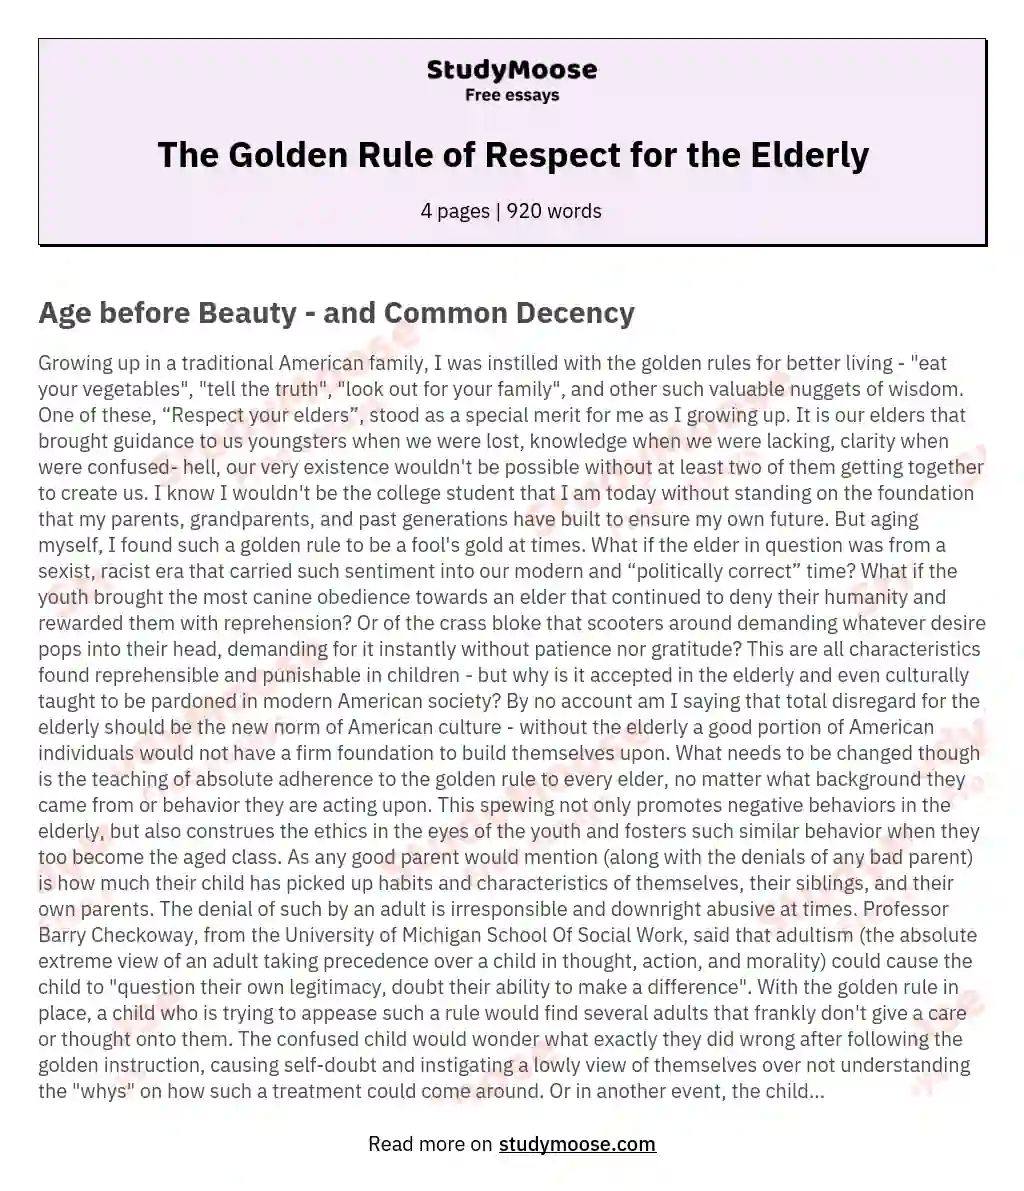 The Golden Rule of Respect for the Elderly essay